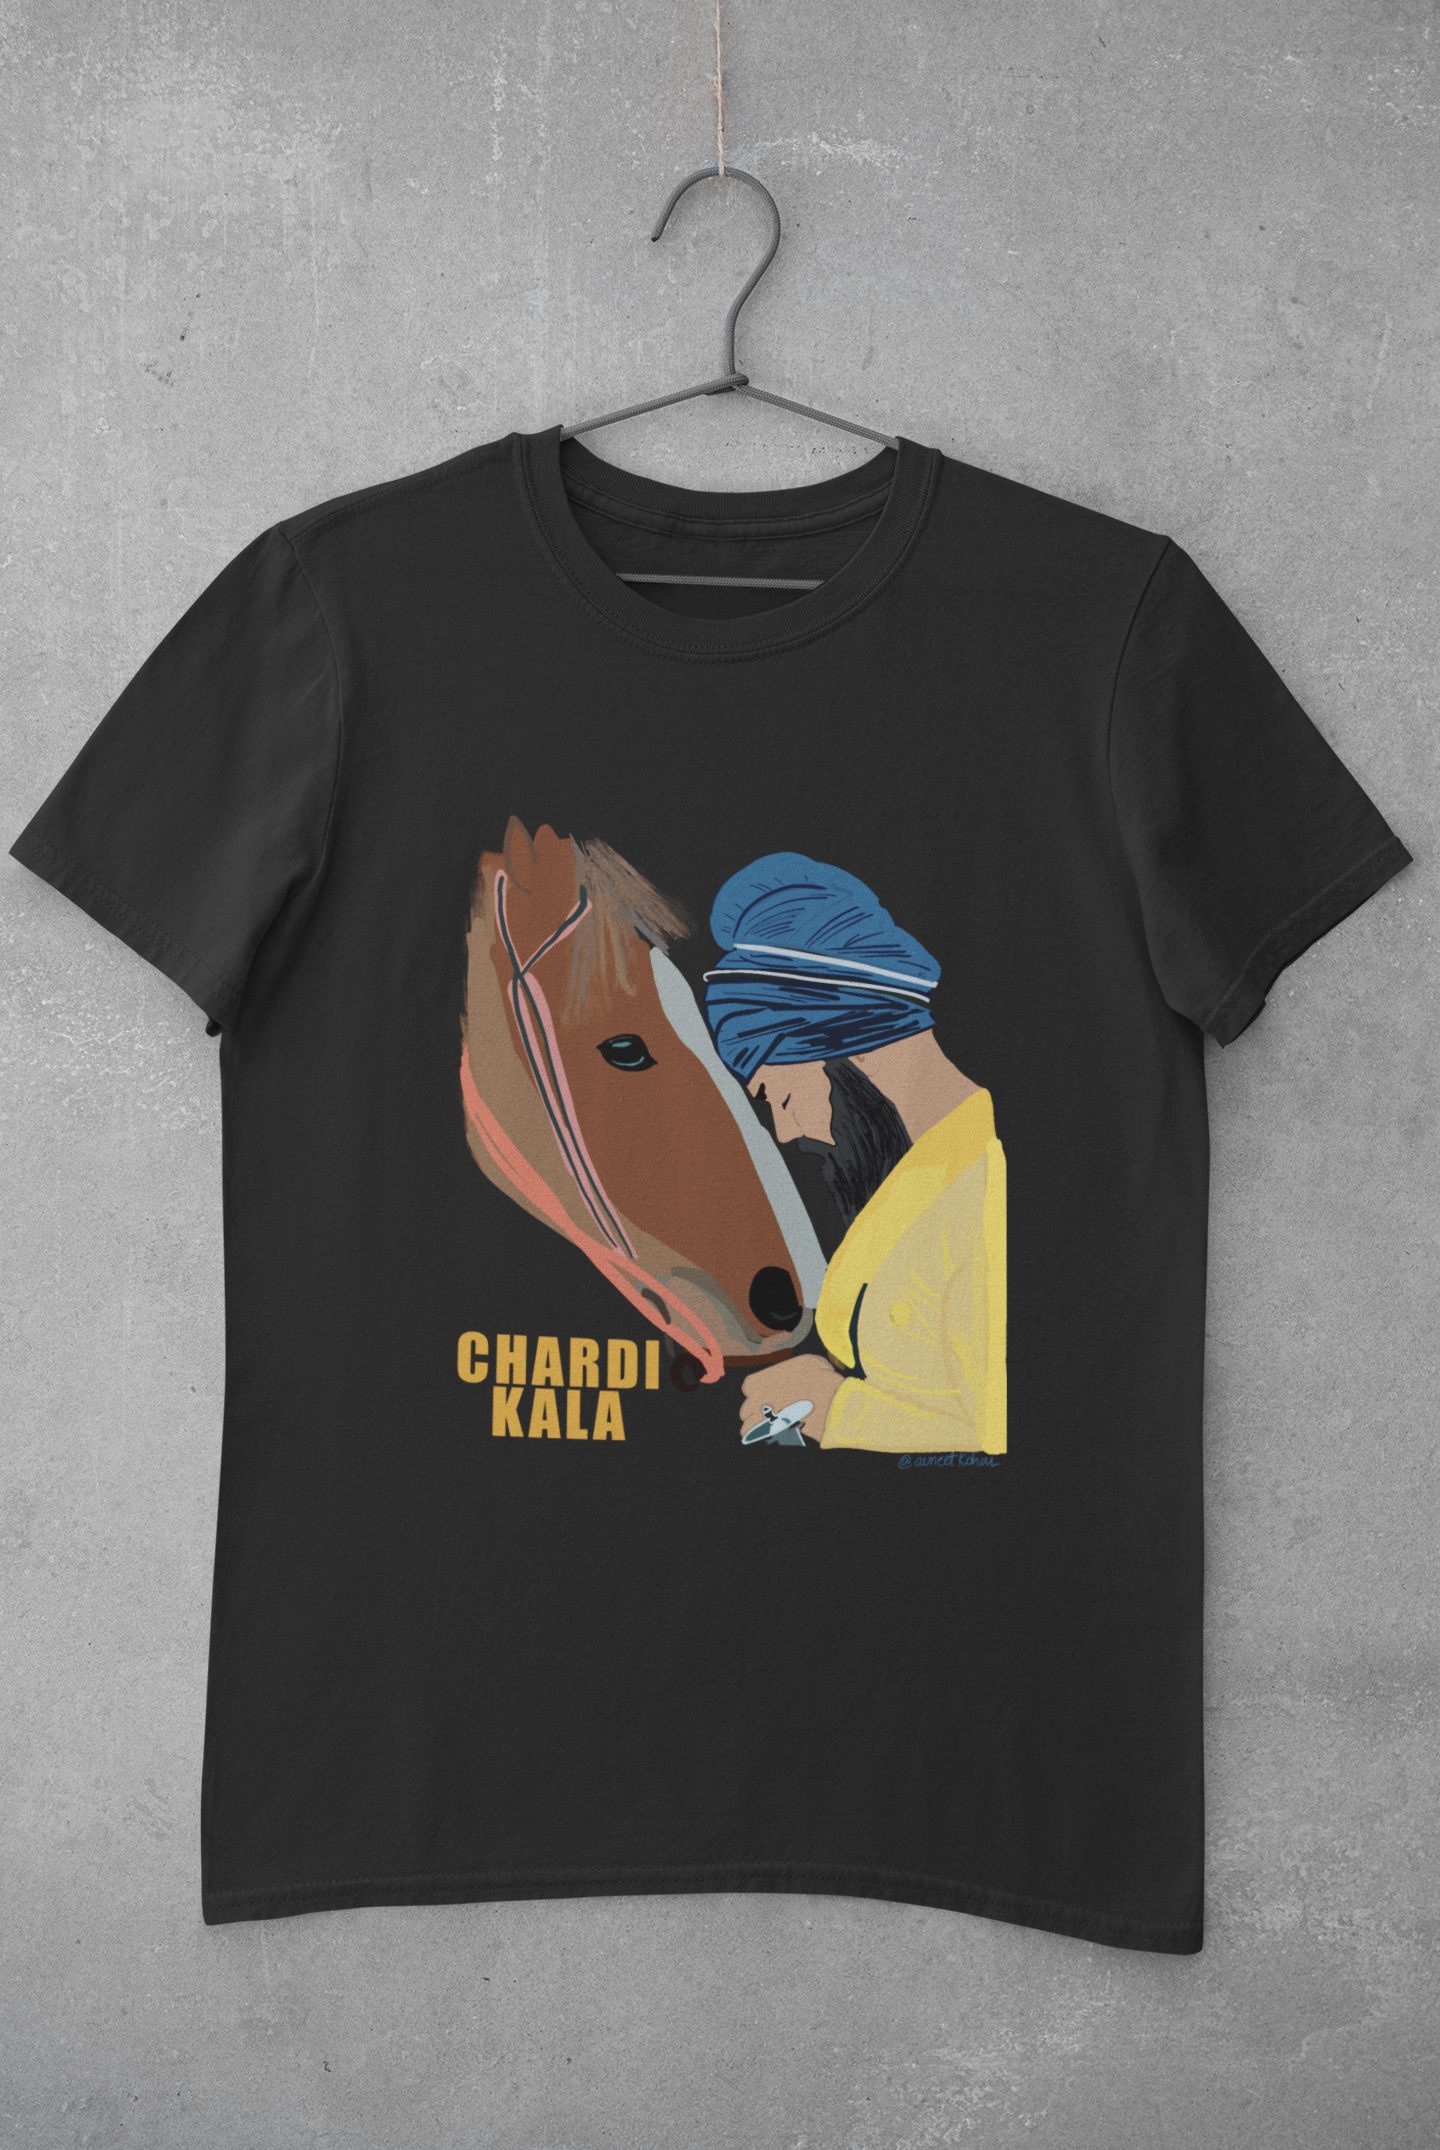 CHARDI KALA T-shirt